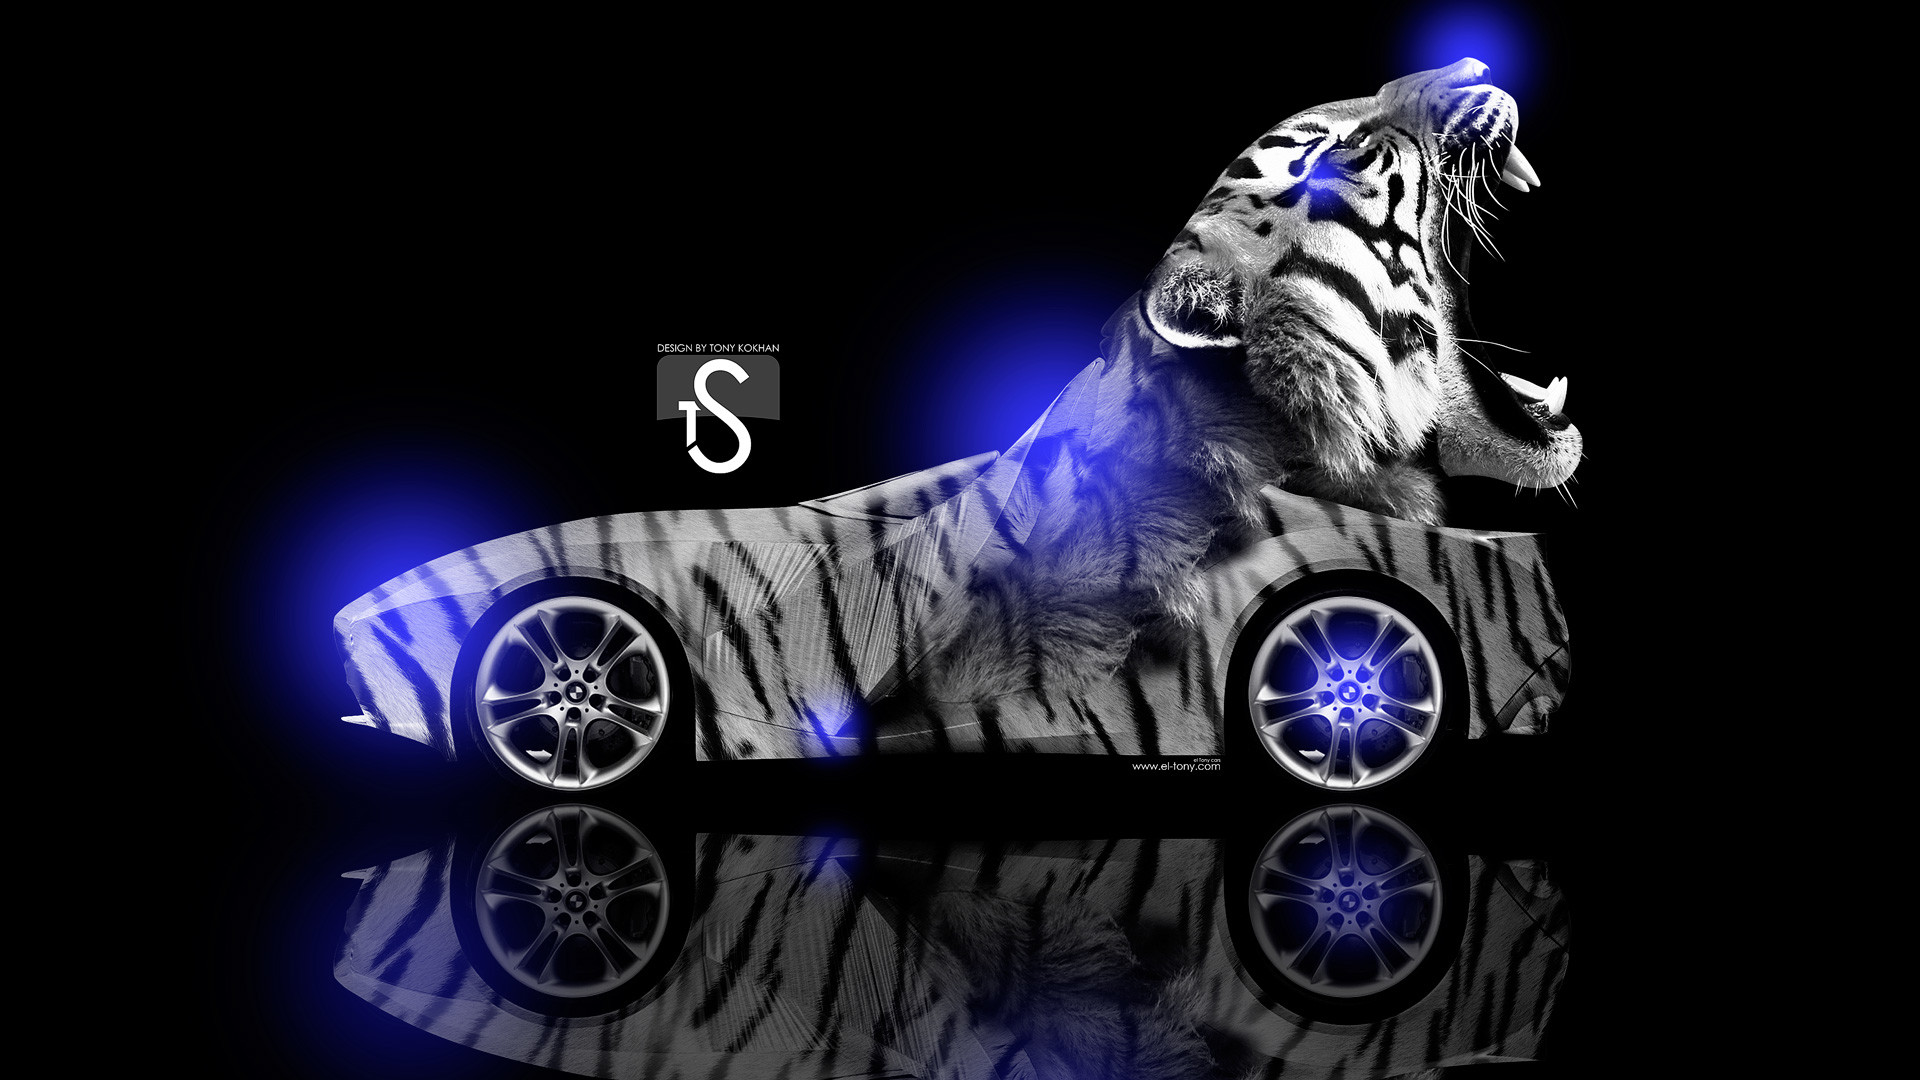 1920x1080 ... BMW-Gina-Light-Visions-Tiger-Blue-Neon-2013- ...